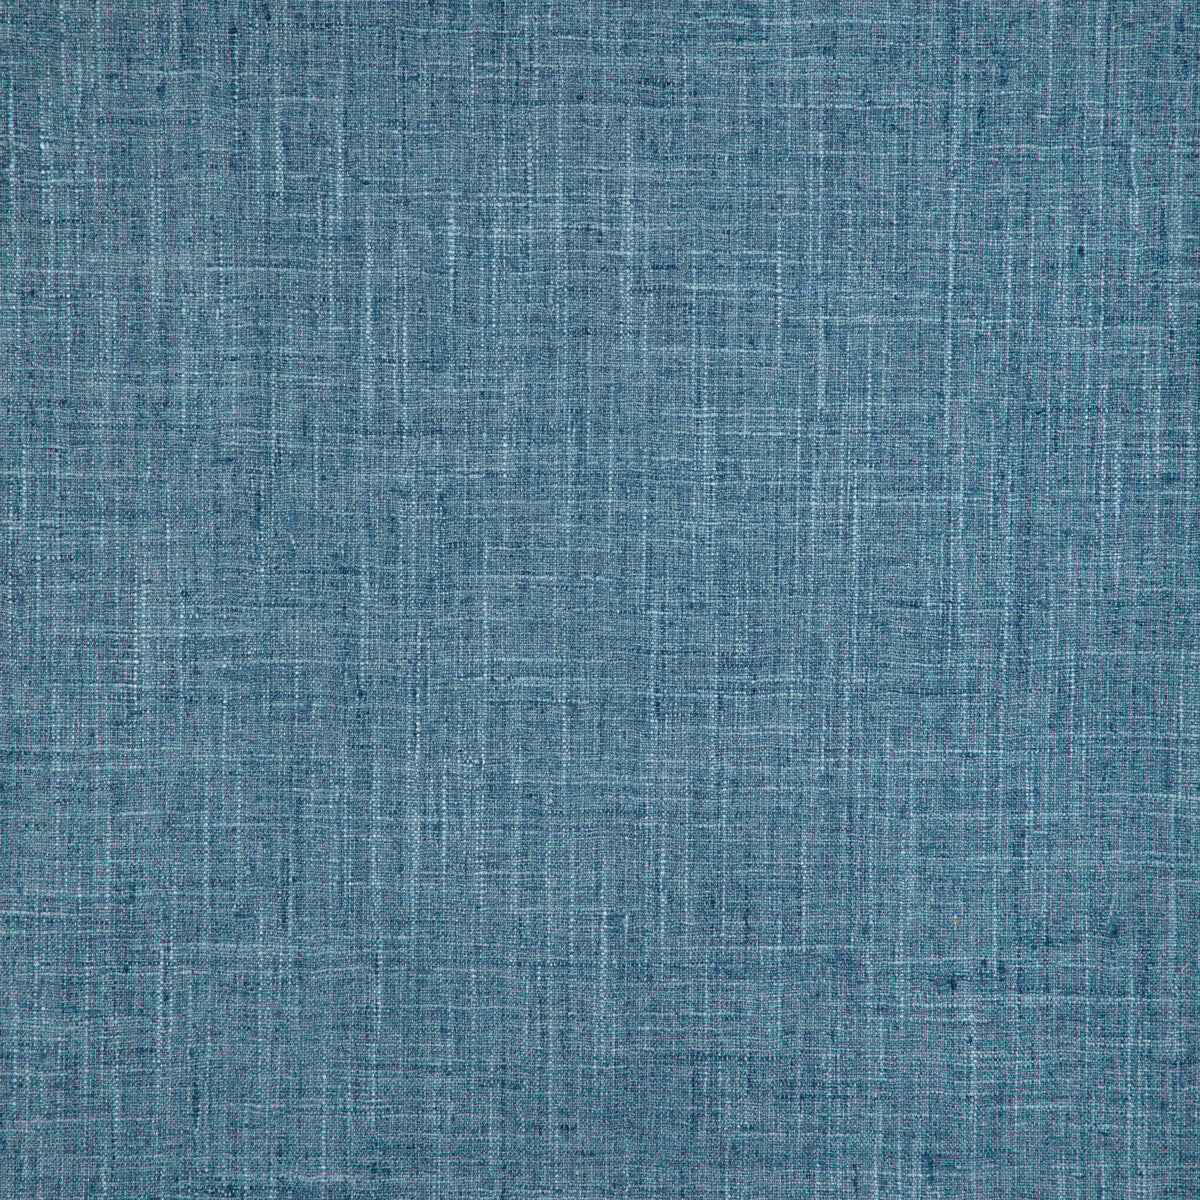 Kravet Smart fabric in 34983-55 color - pattern 34983.55.0 - by Kravet Smart